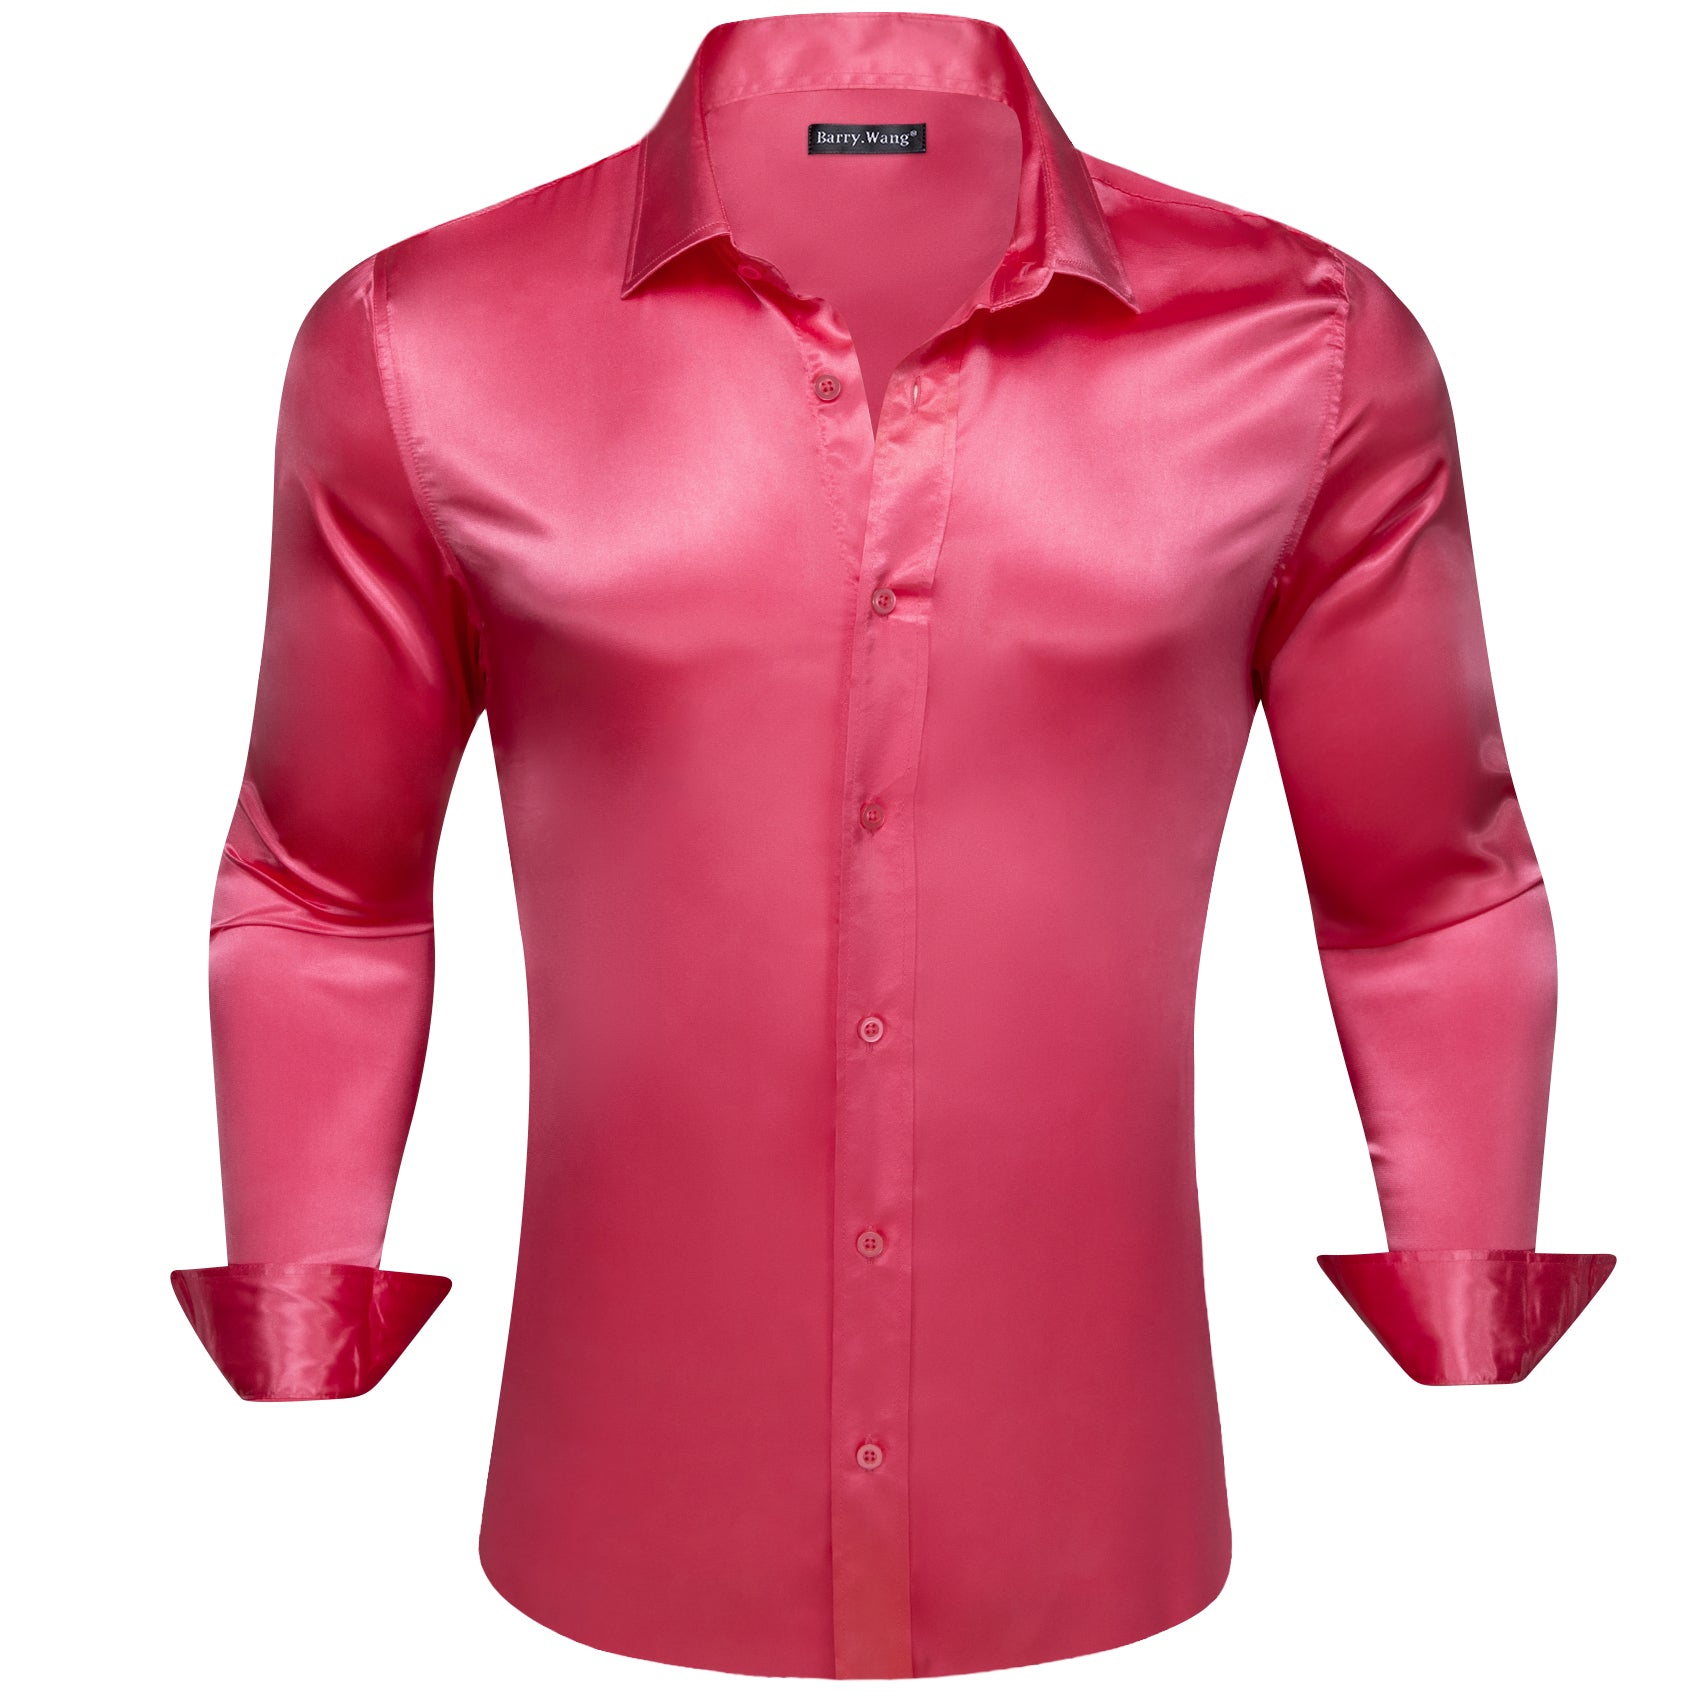 Barry.wang Shock Pink Solid Silk Shirt